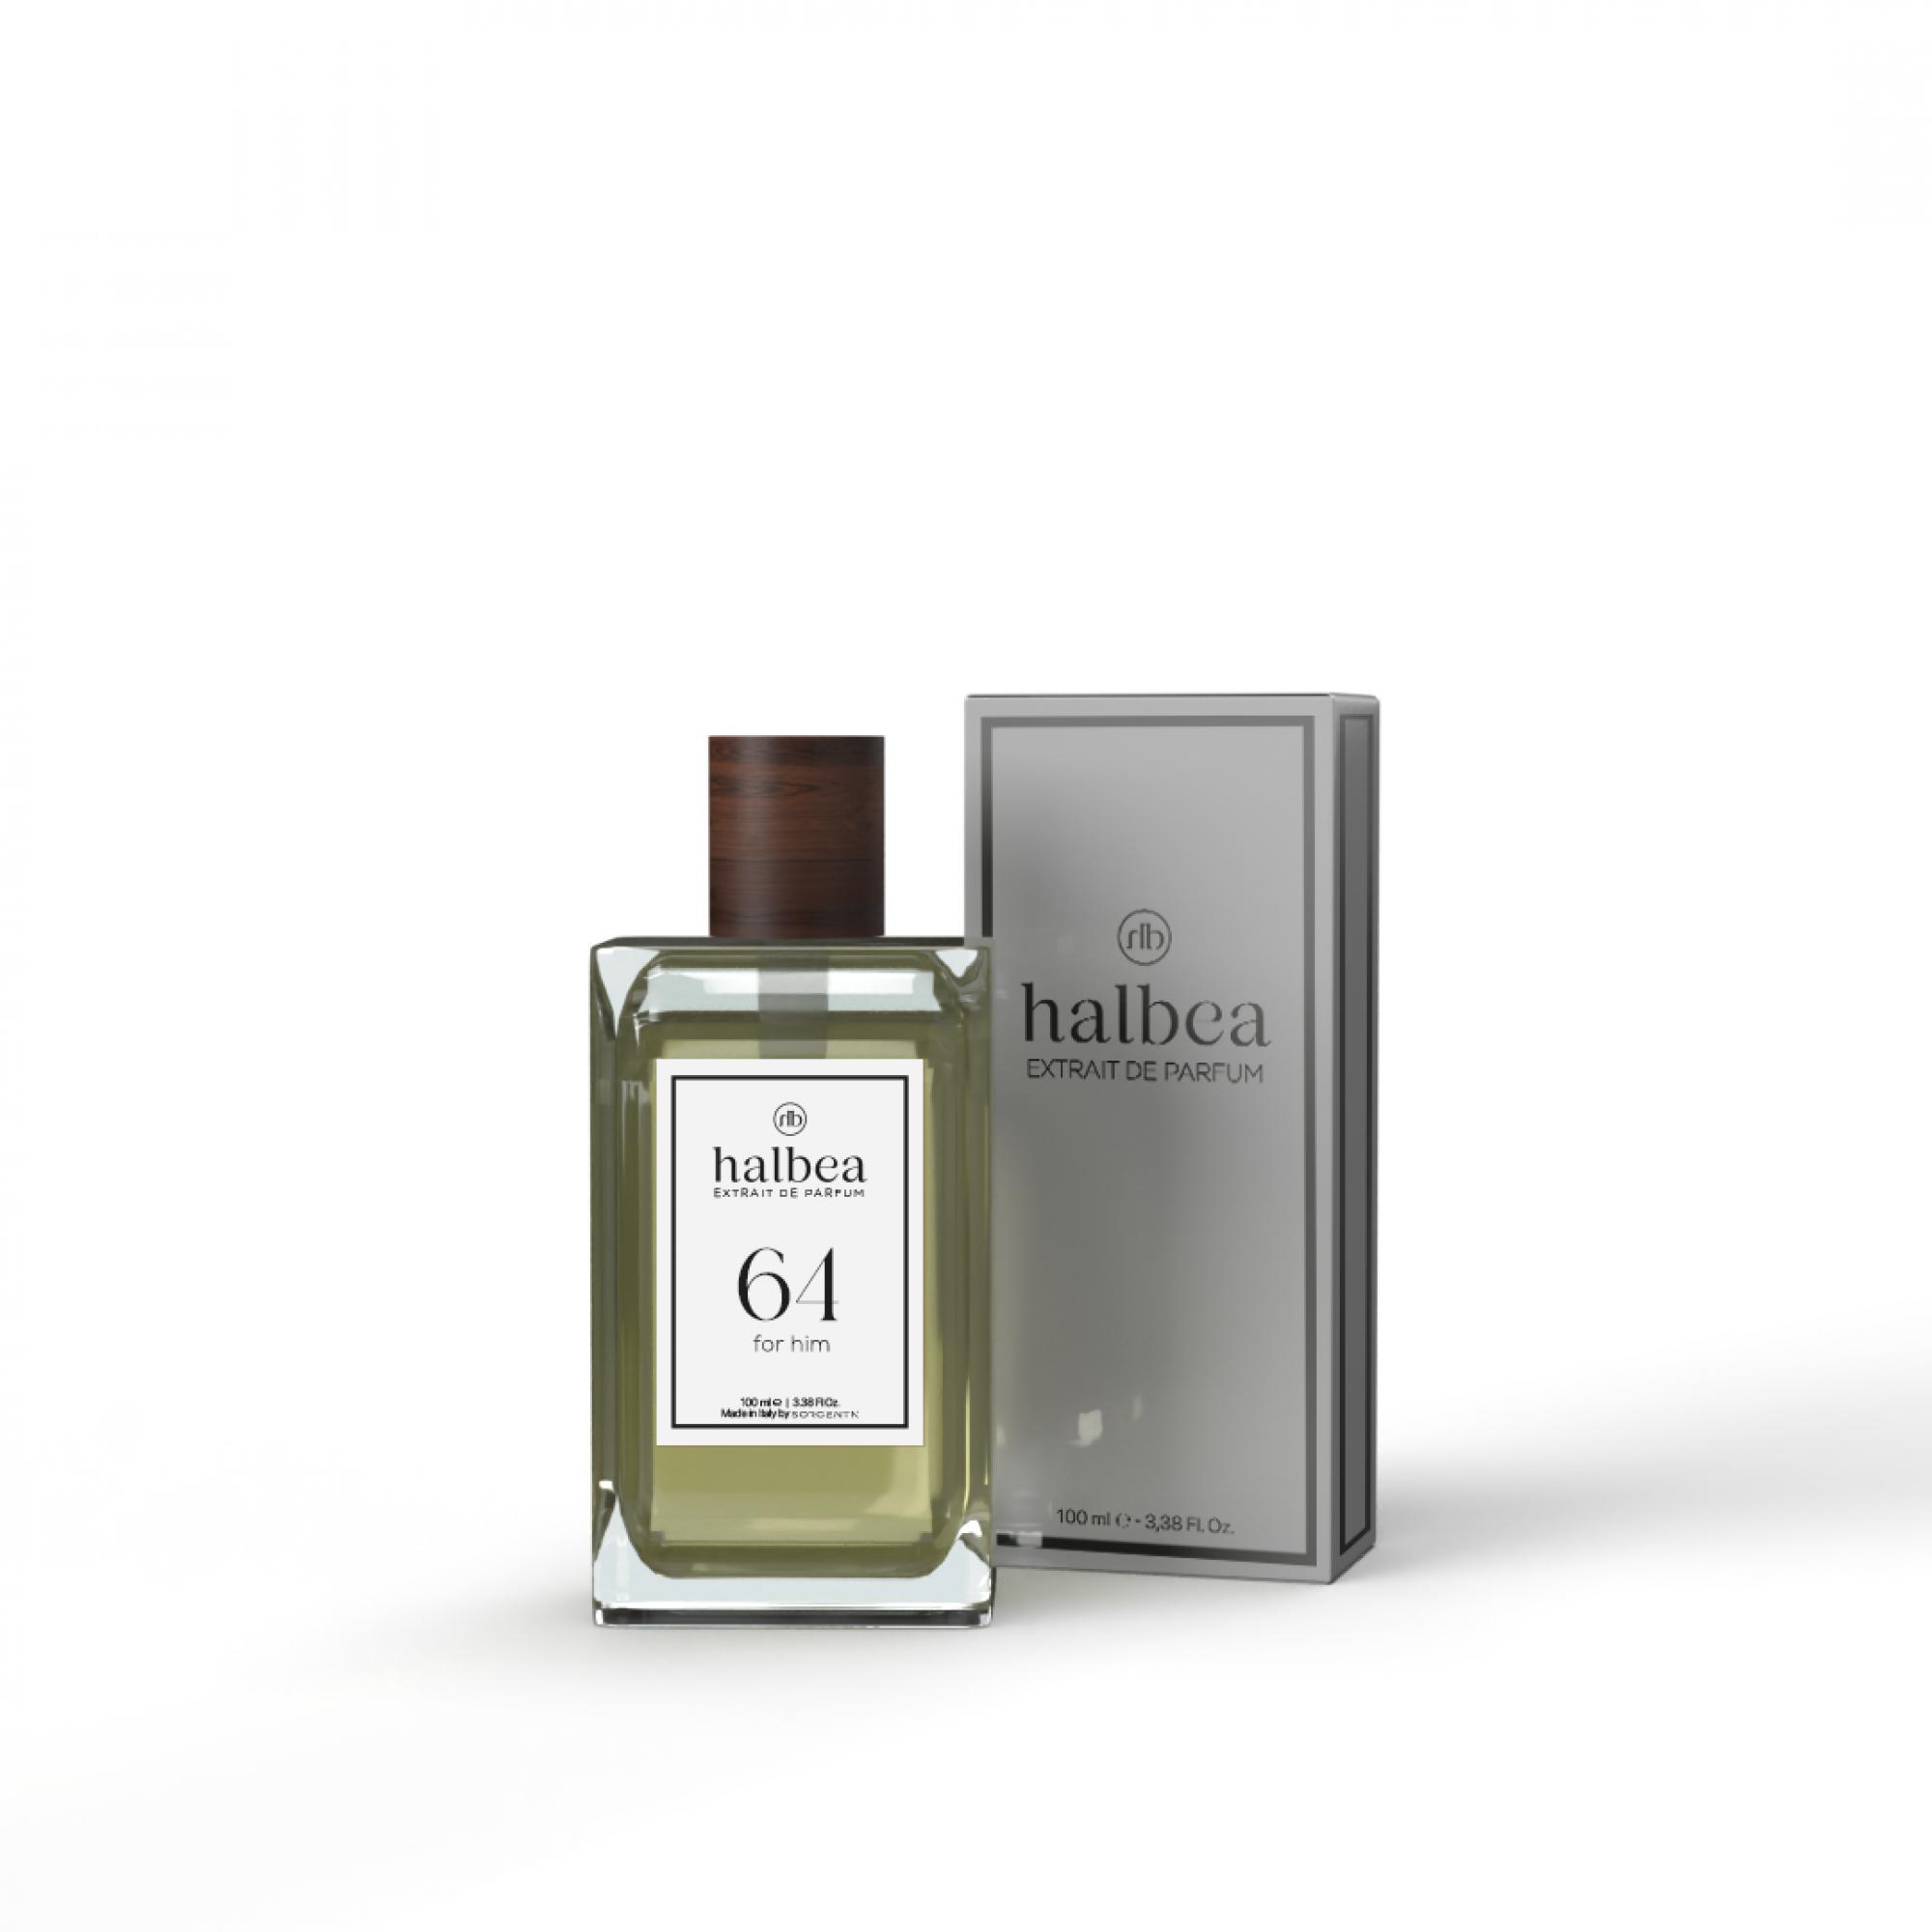  Halbea Parfum Nr. 64 insp. by Abercrombie & Fitch Fierce Sorgenta Duftzwillinge 100ml